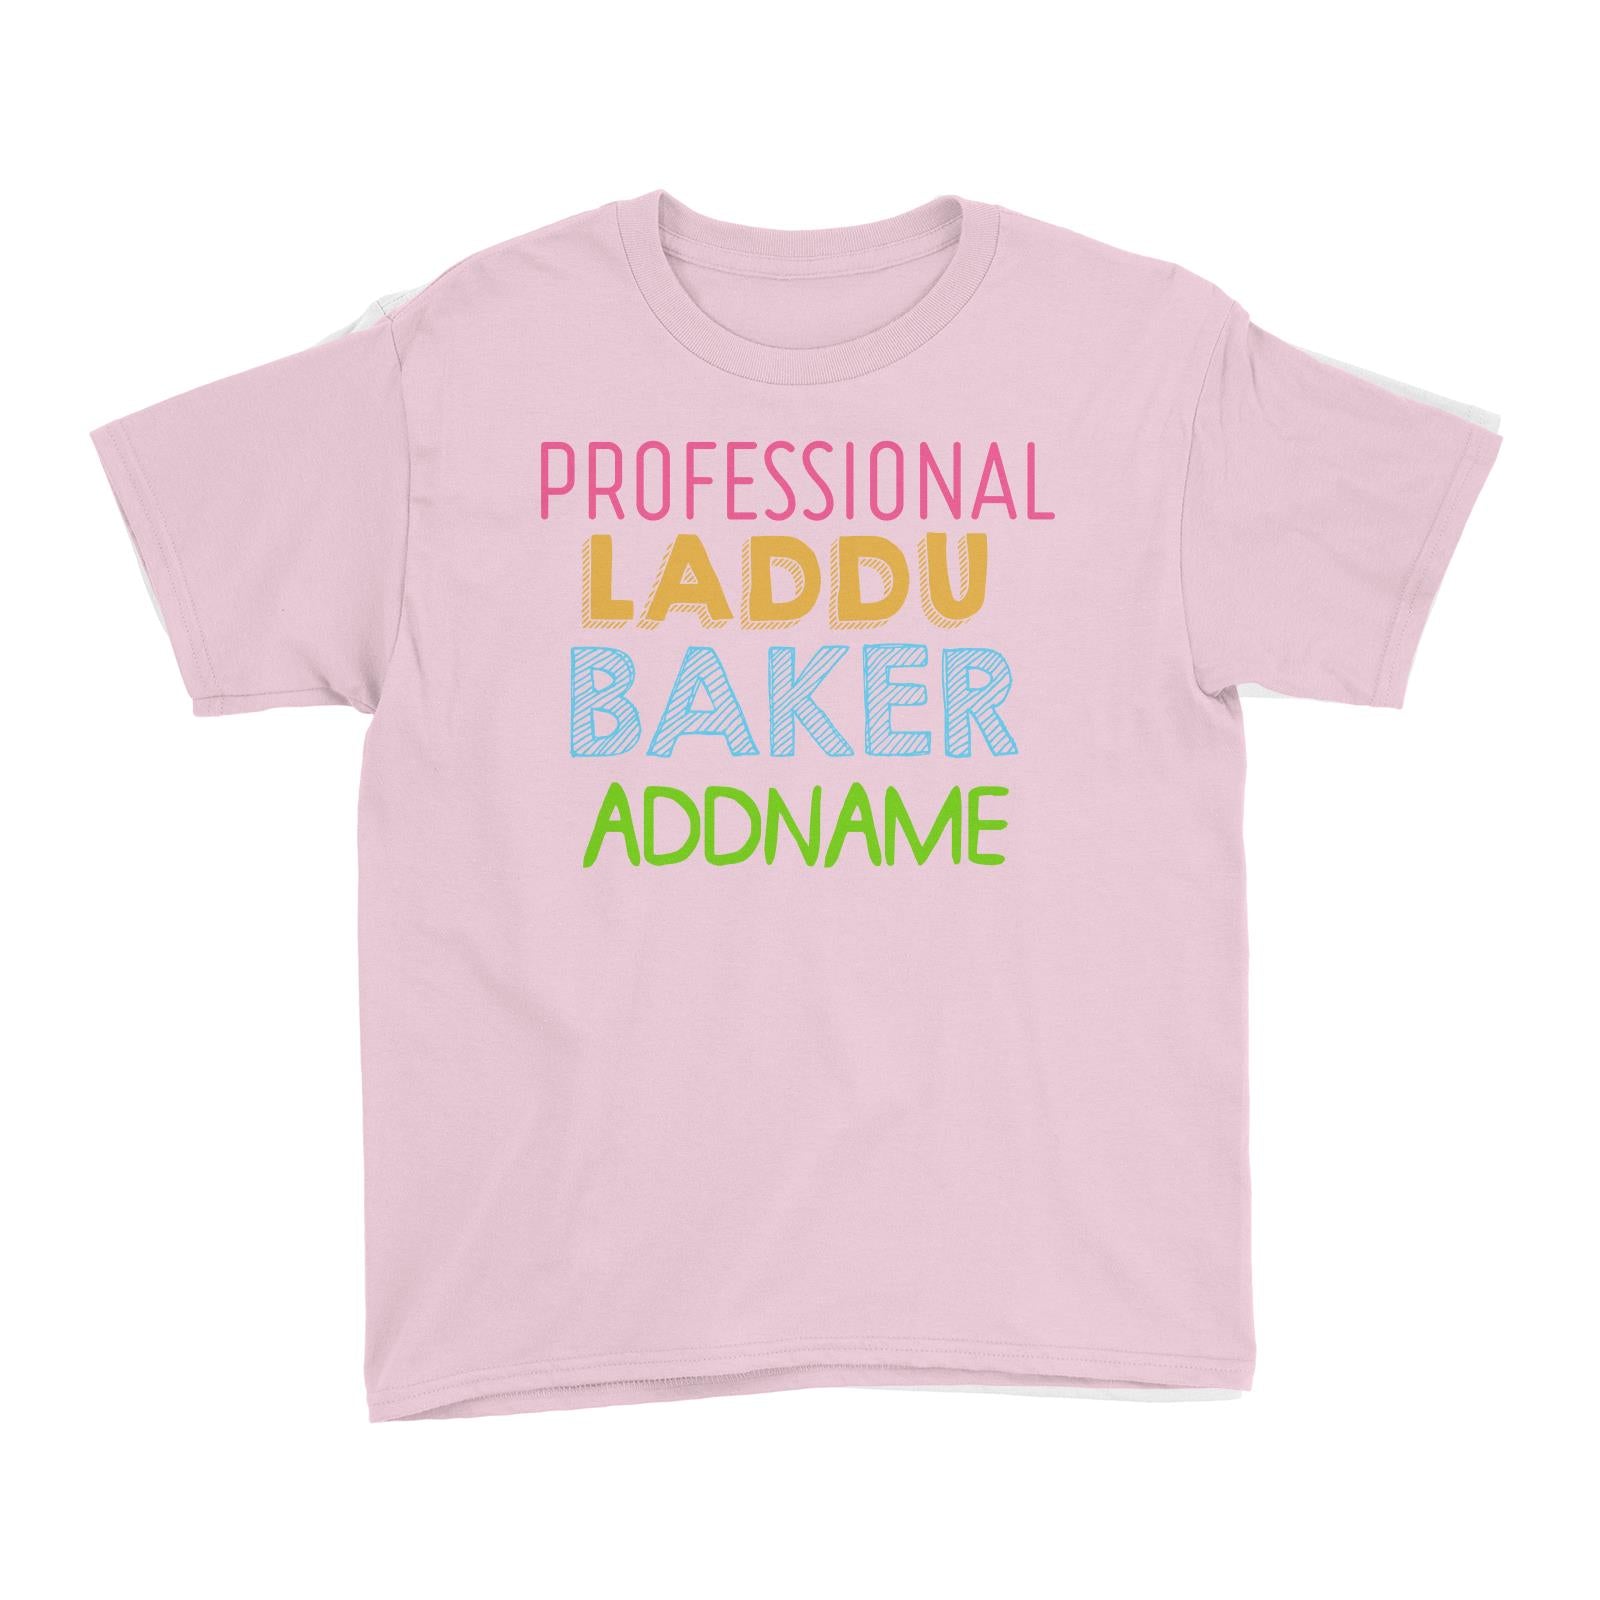 Professional Laddu Baker Addname Kid's T-Shirt